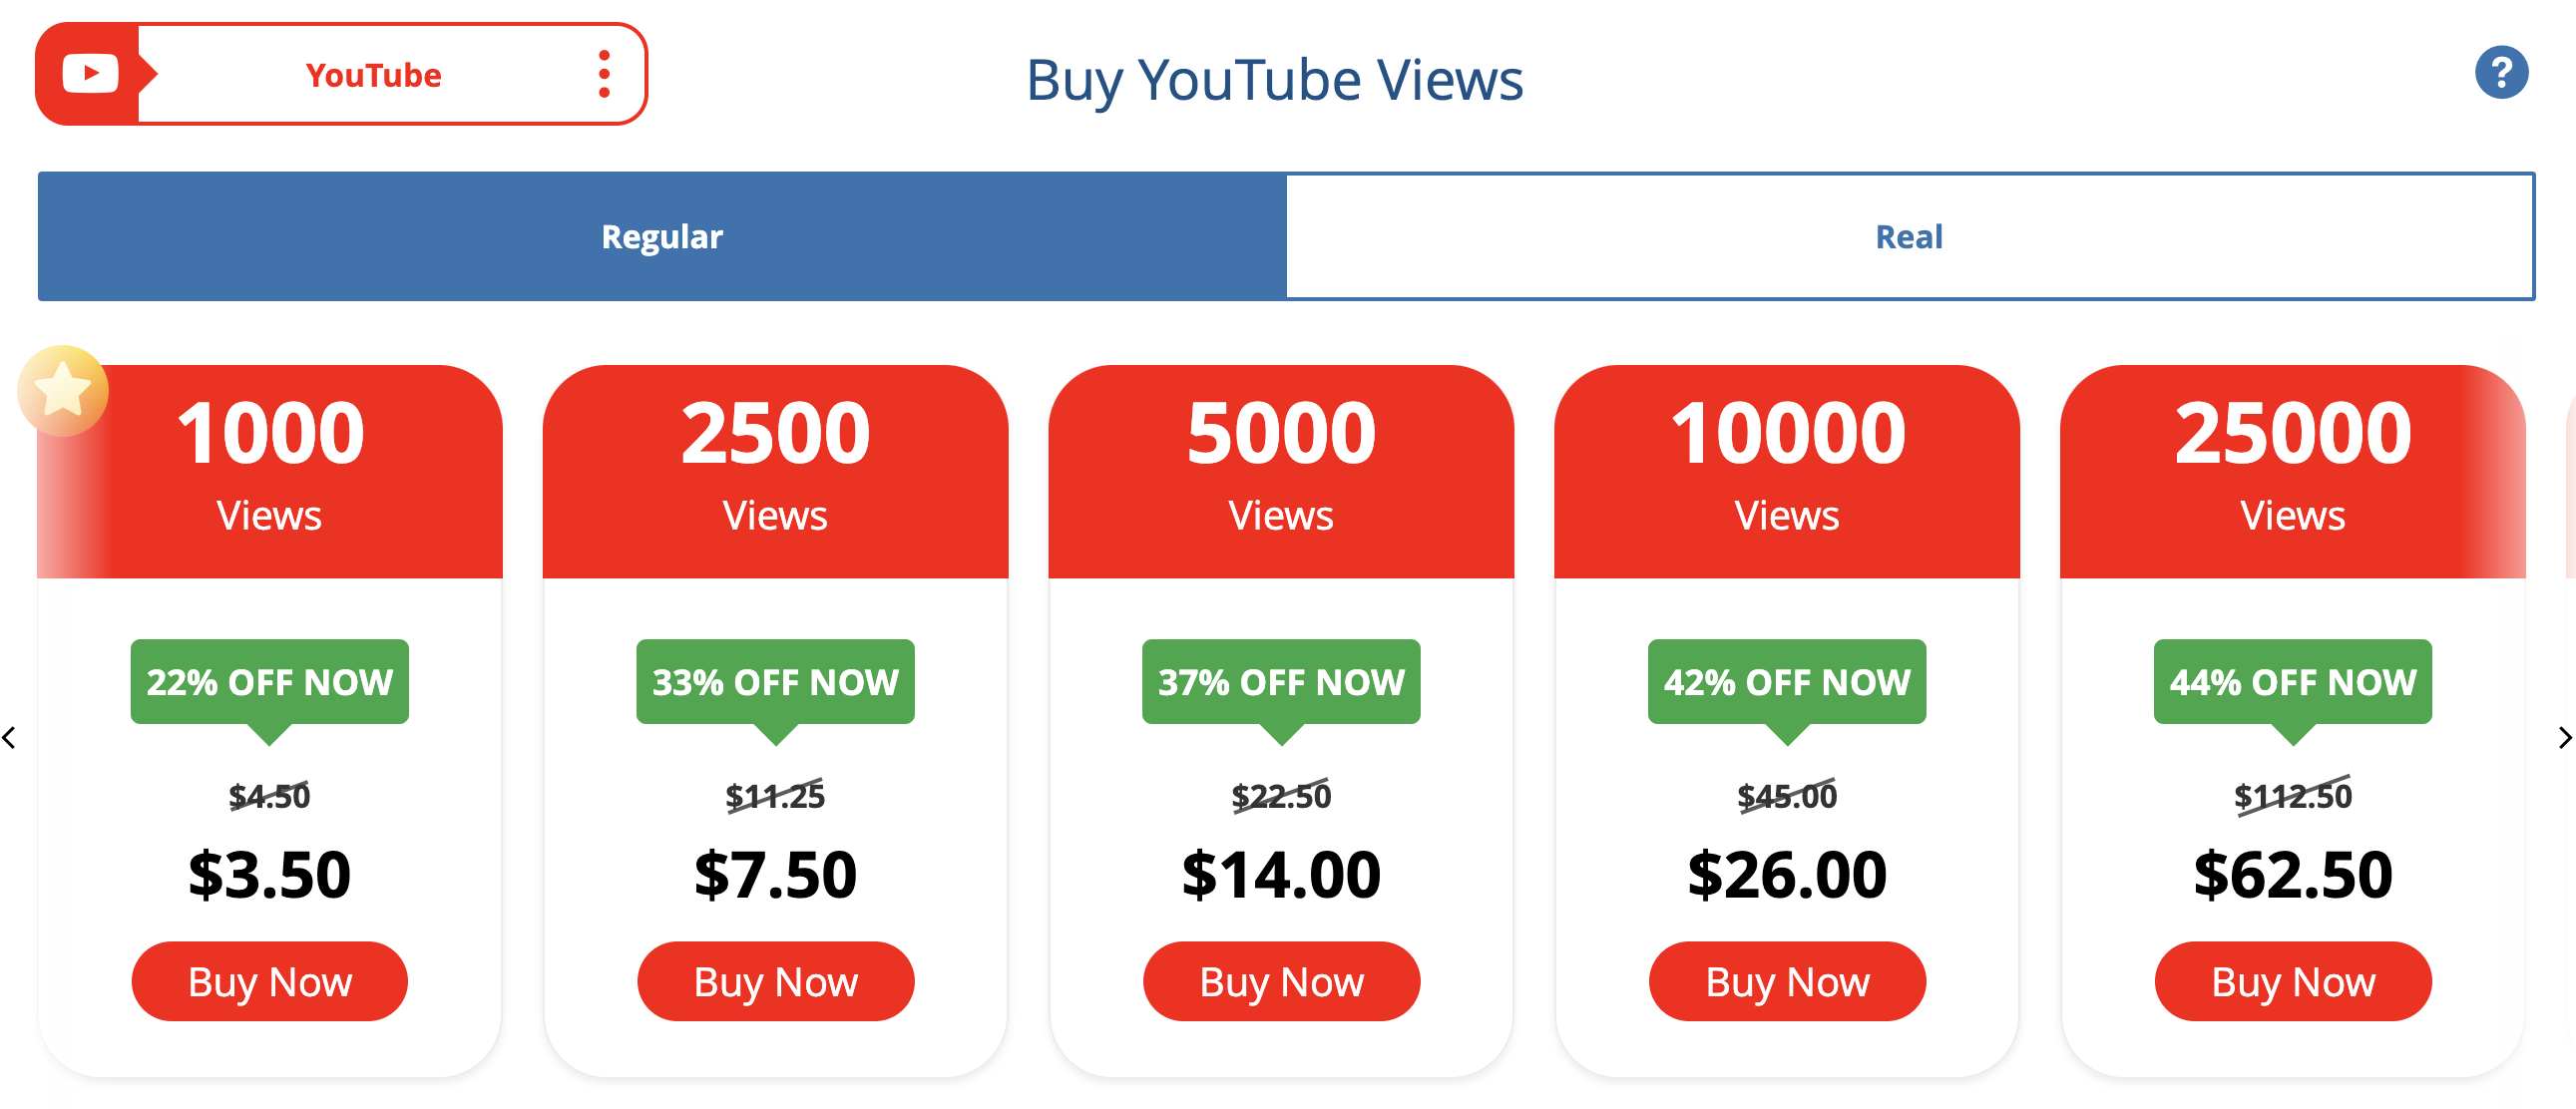 should you buy youtube views?